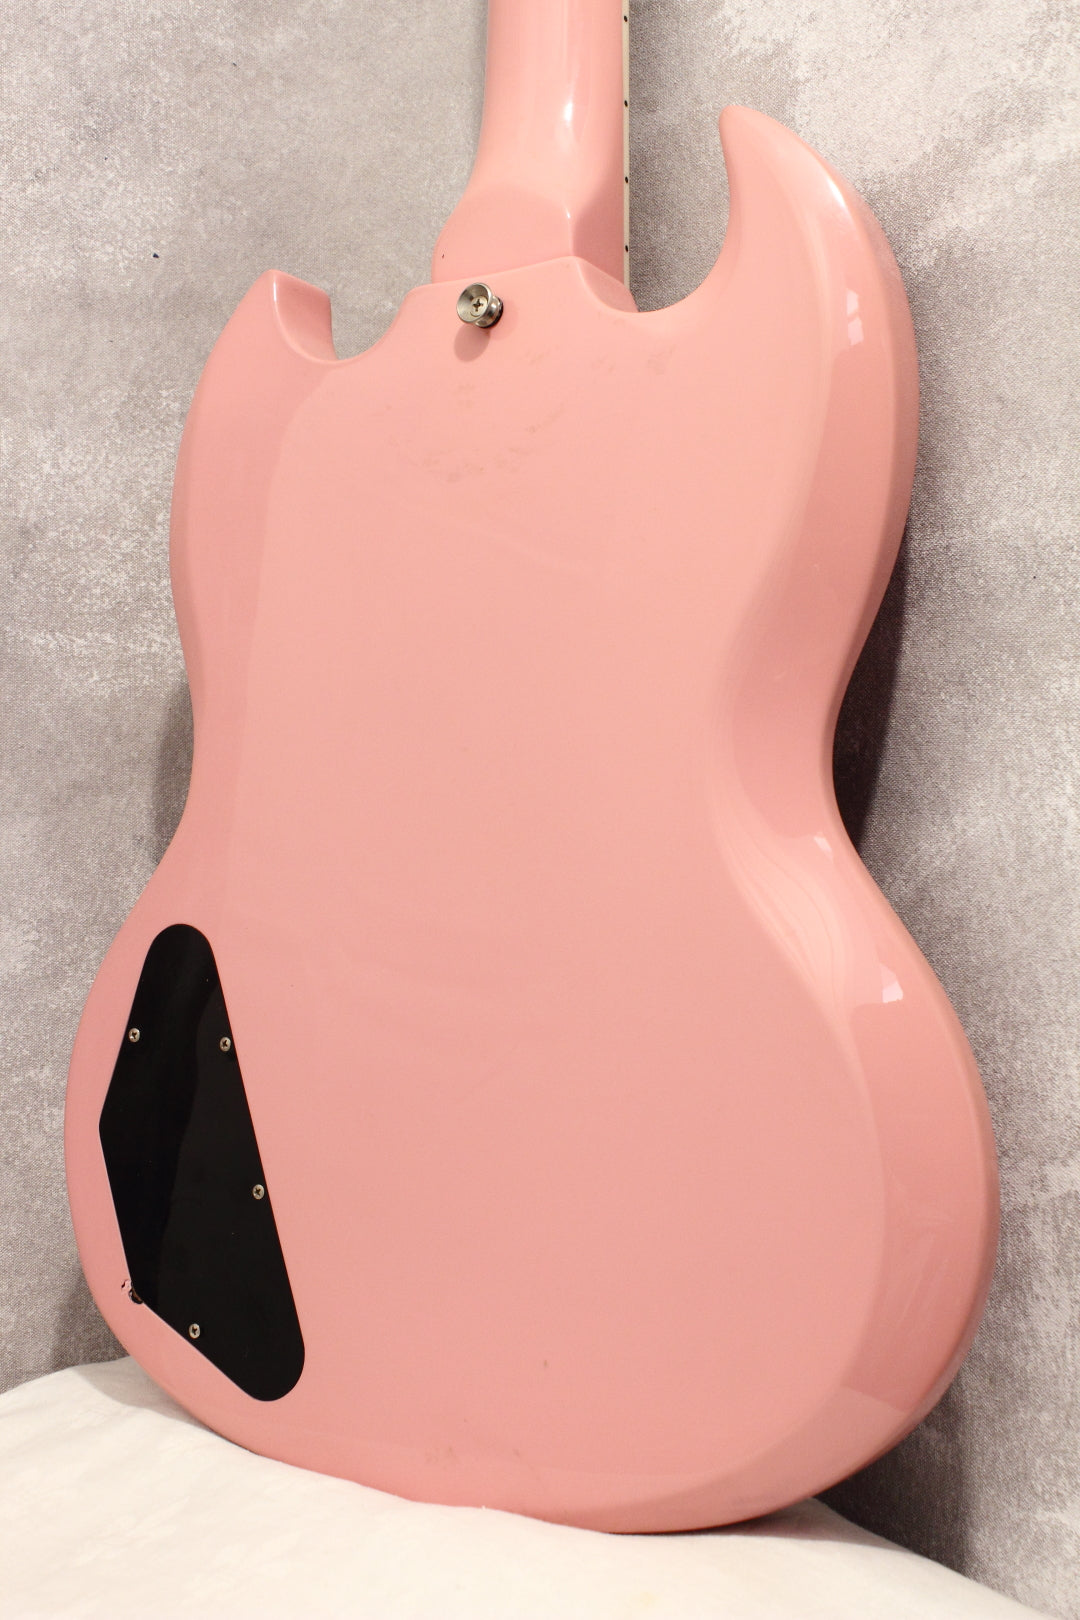 Burny Swanky Spider PSG-55 Pale Pink 2009 – Topshelf Instruments